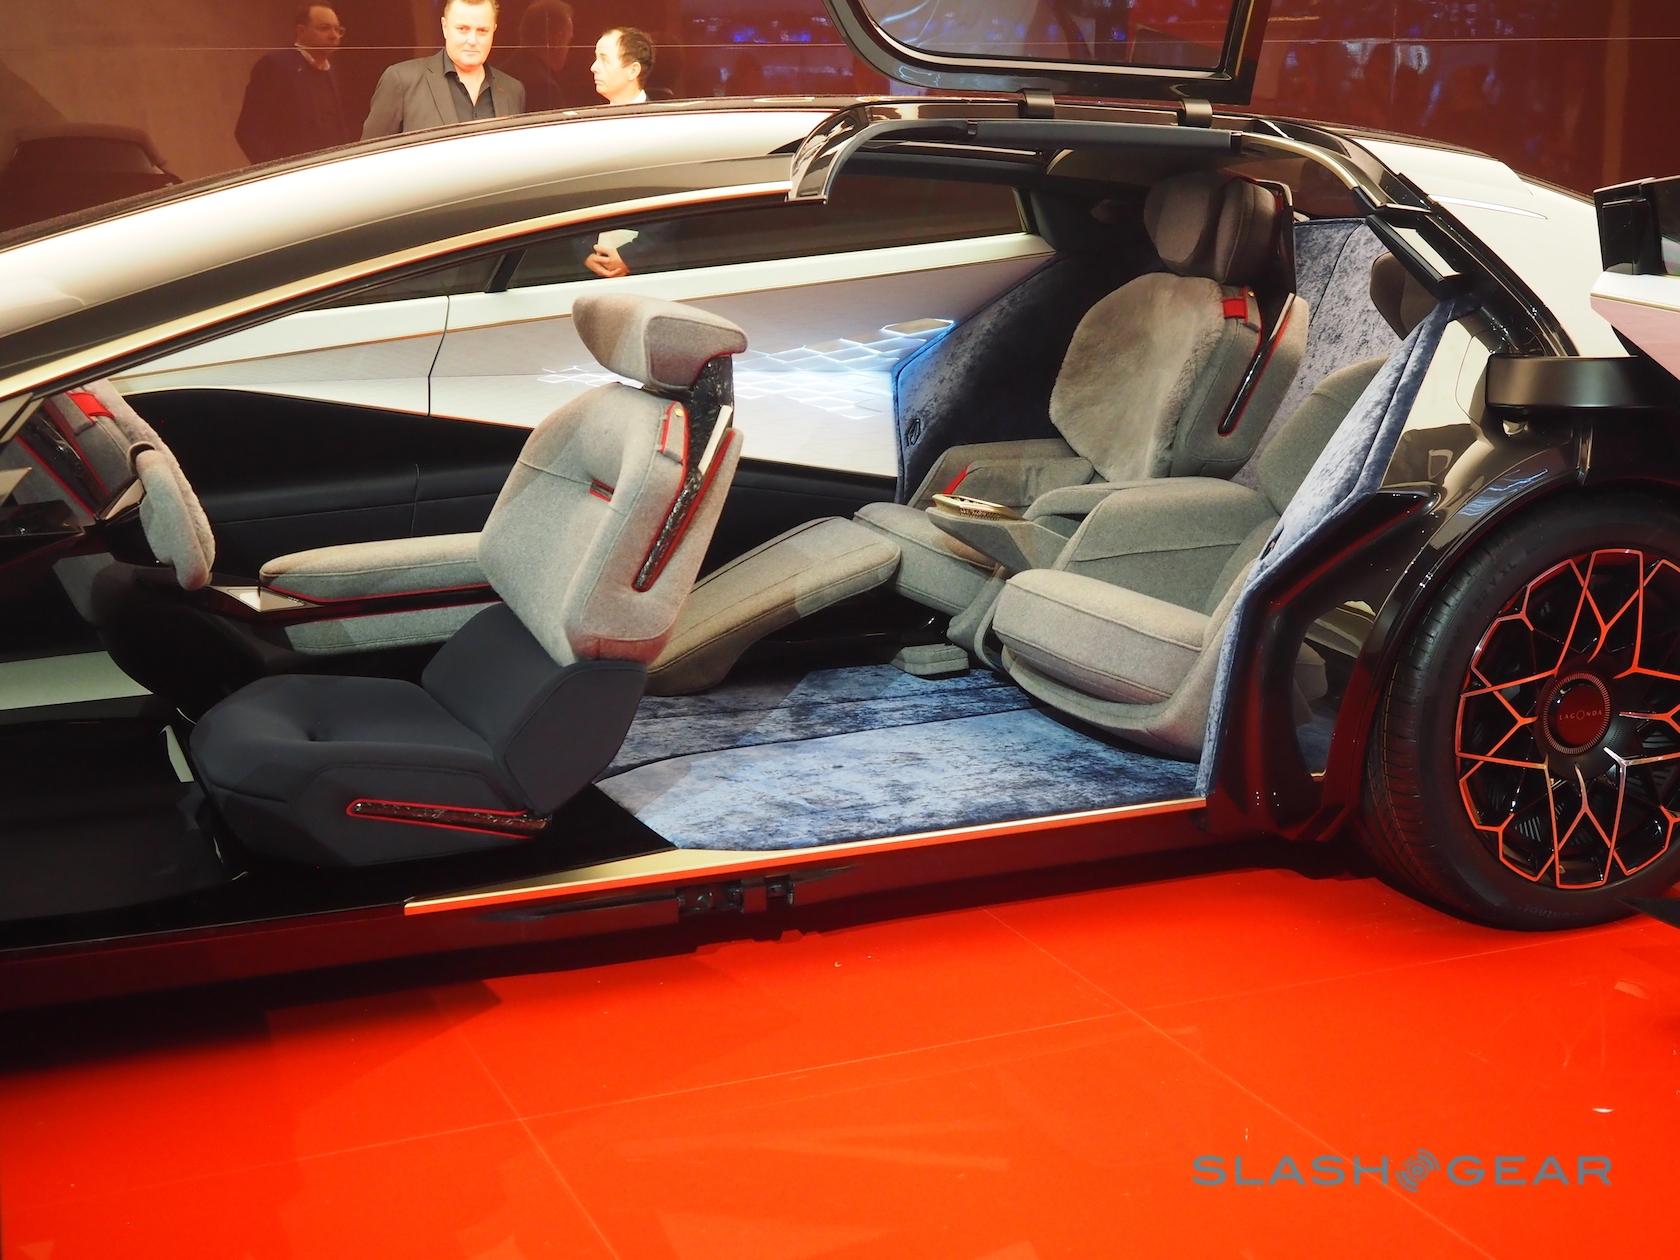 This Lagonda All Terrain Suv Will Head Aston Martin S Luxury